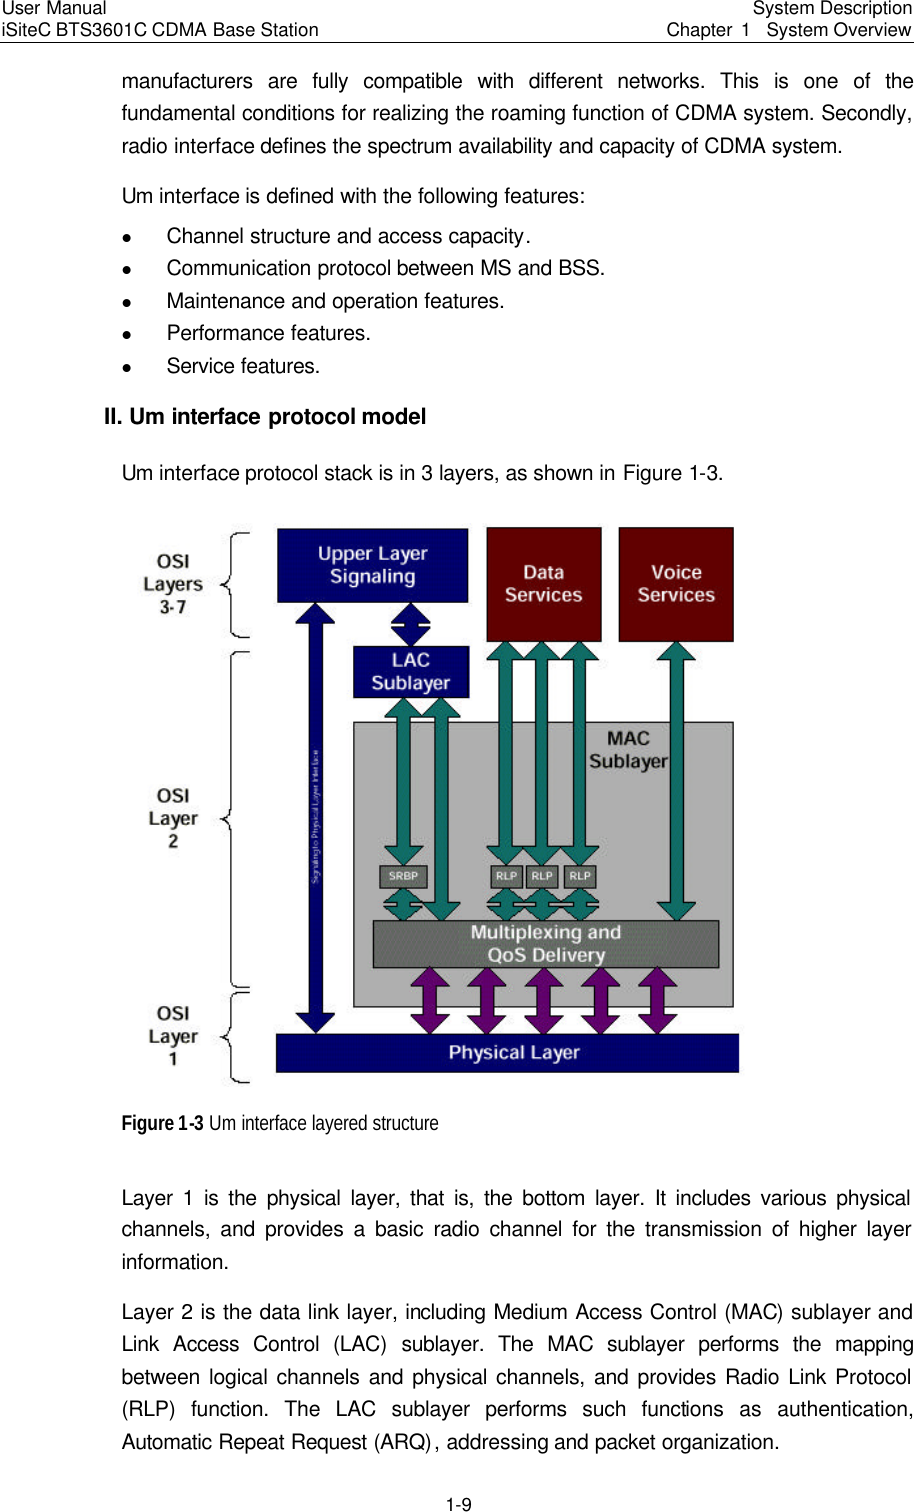 Page 12 of Huawei Technologies BTS3601C-800 CDMA Base Station User Manual 3